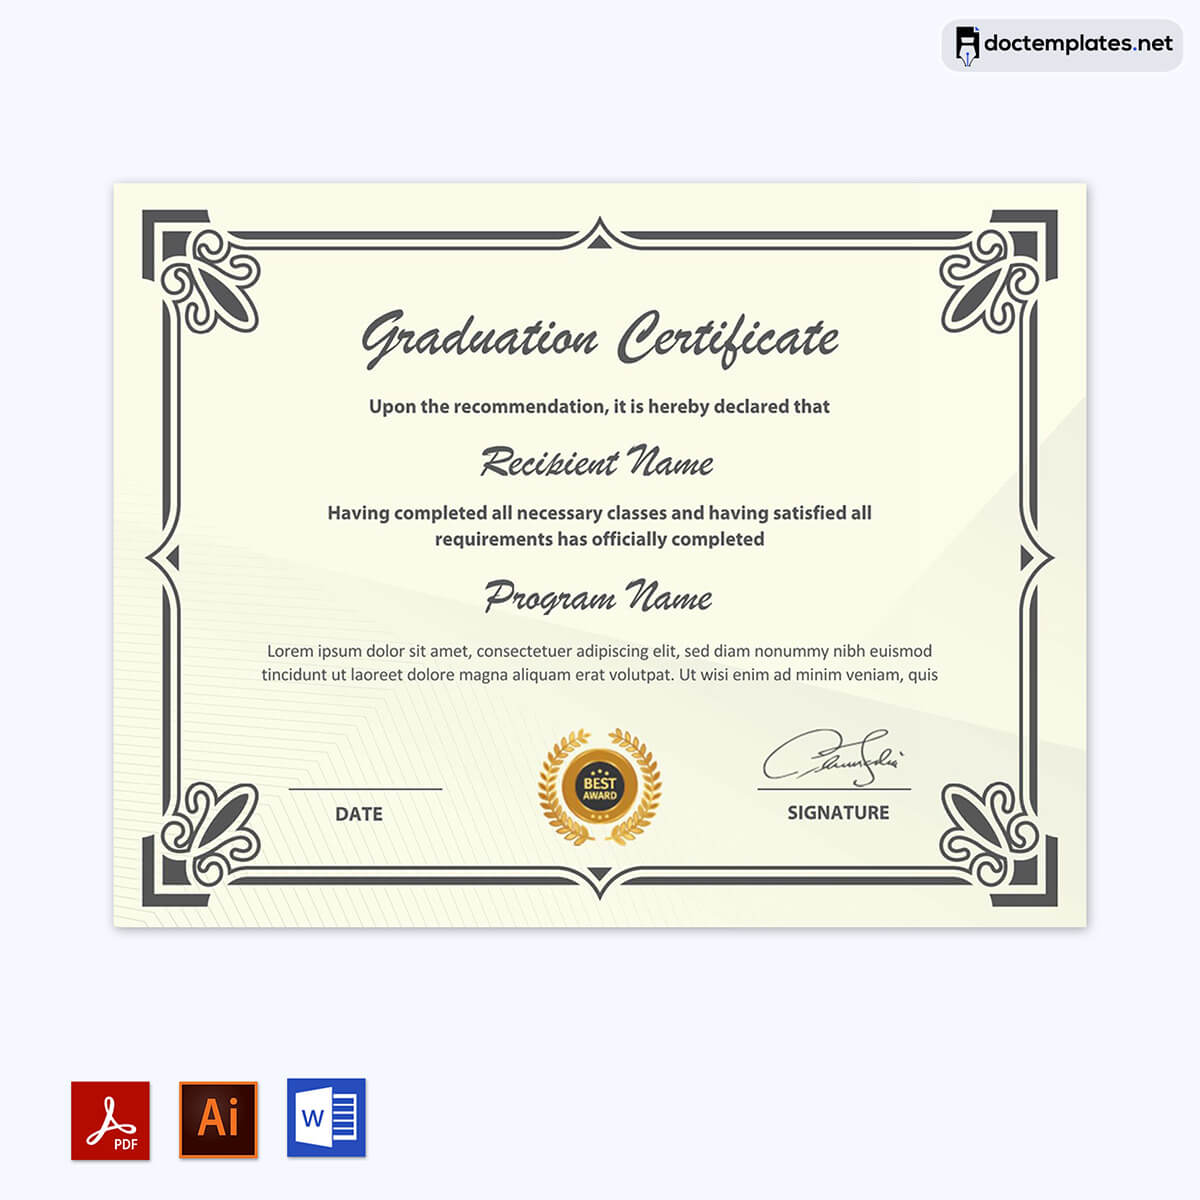 Image of Graduation certificate template Word free
Graduation certificate template Word free
